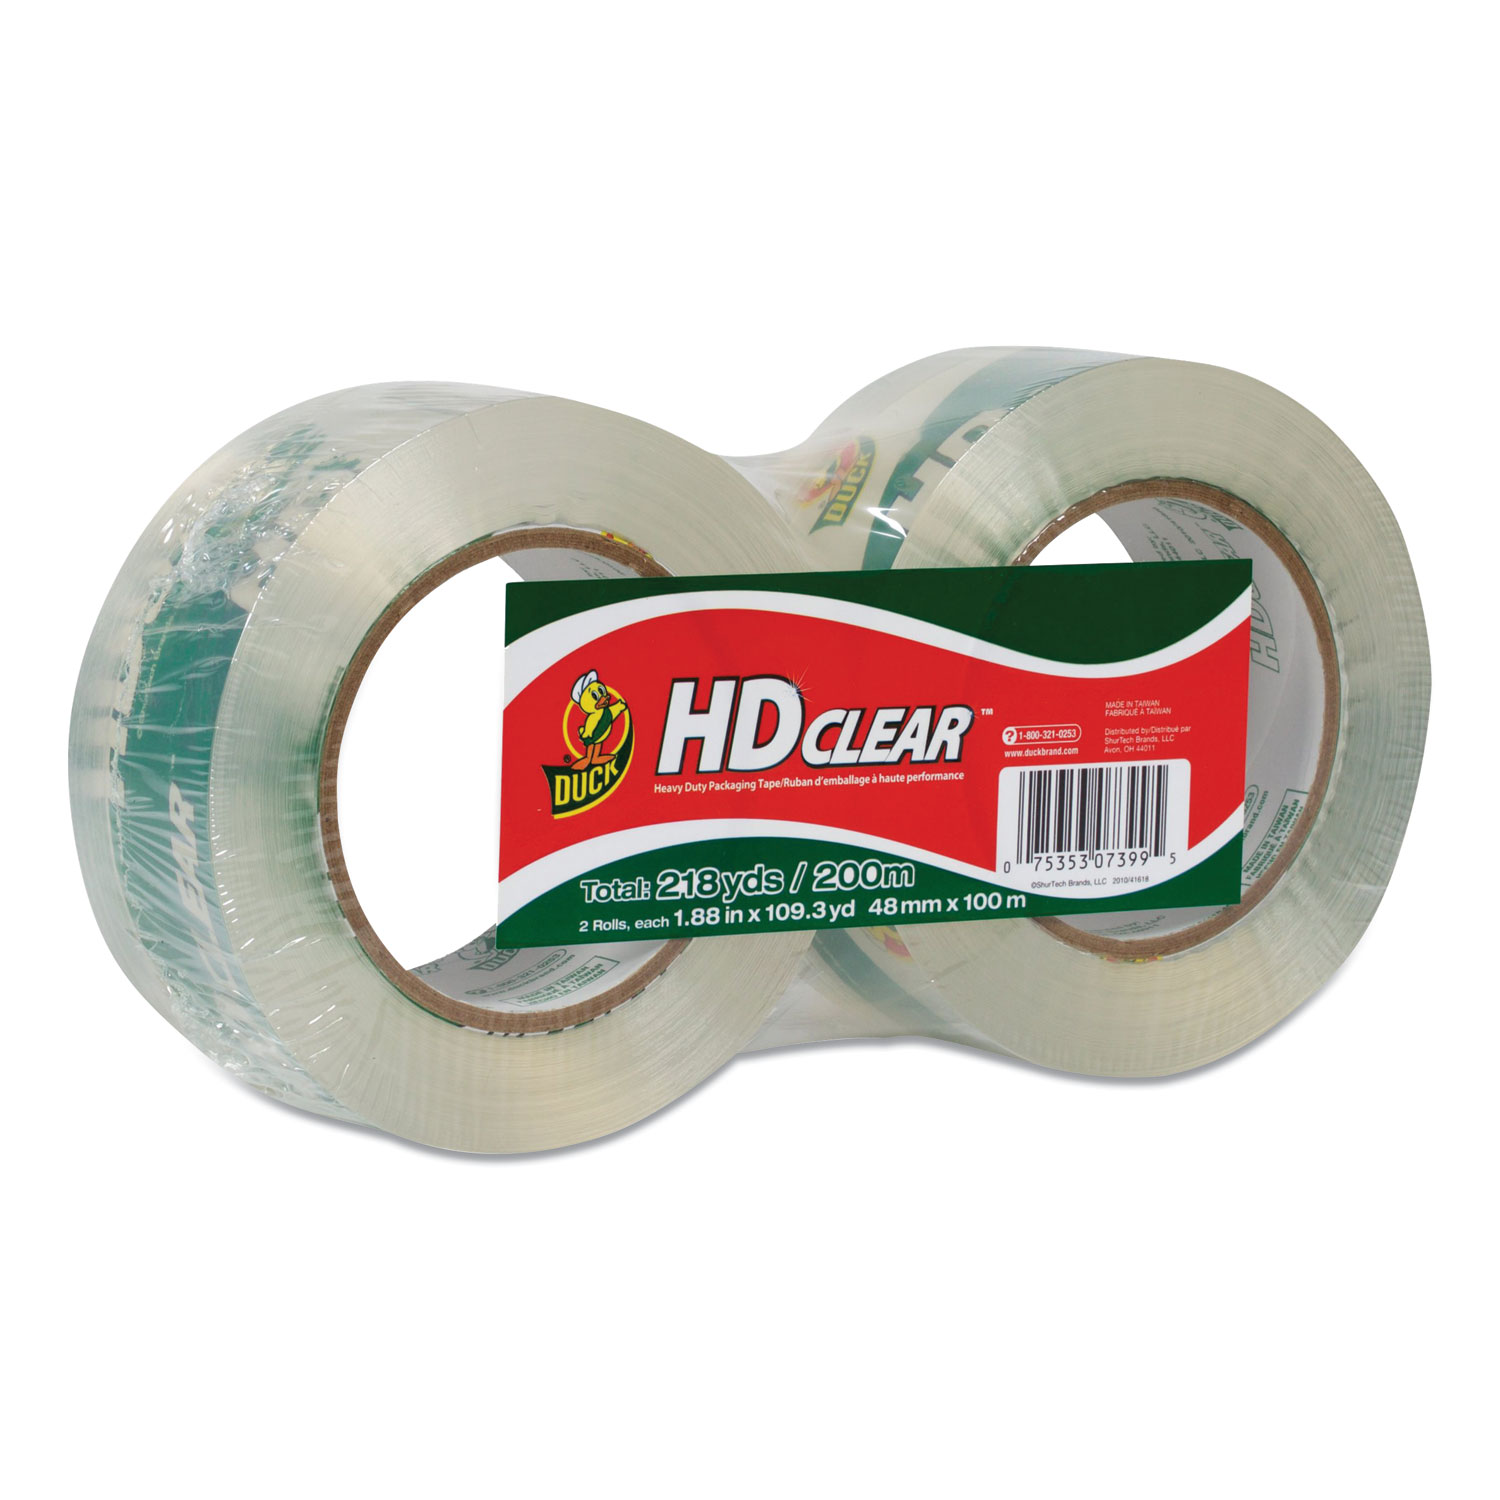 Duck® Heavy-Duty Carton Packaging Tape, 3 Core, 1.88 x 109 yds, Clear, 2/Pack